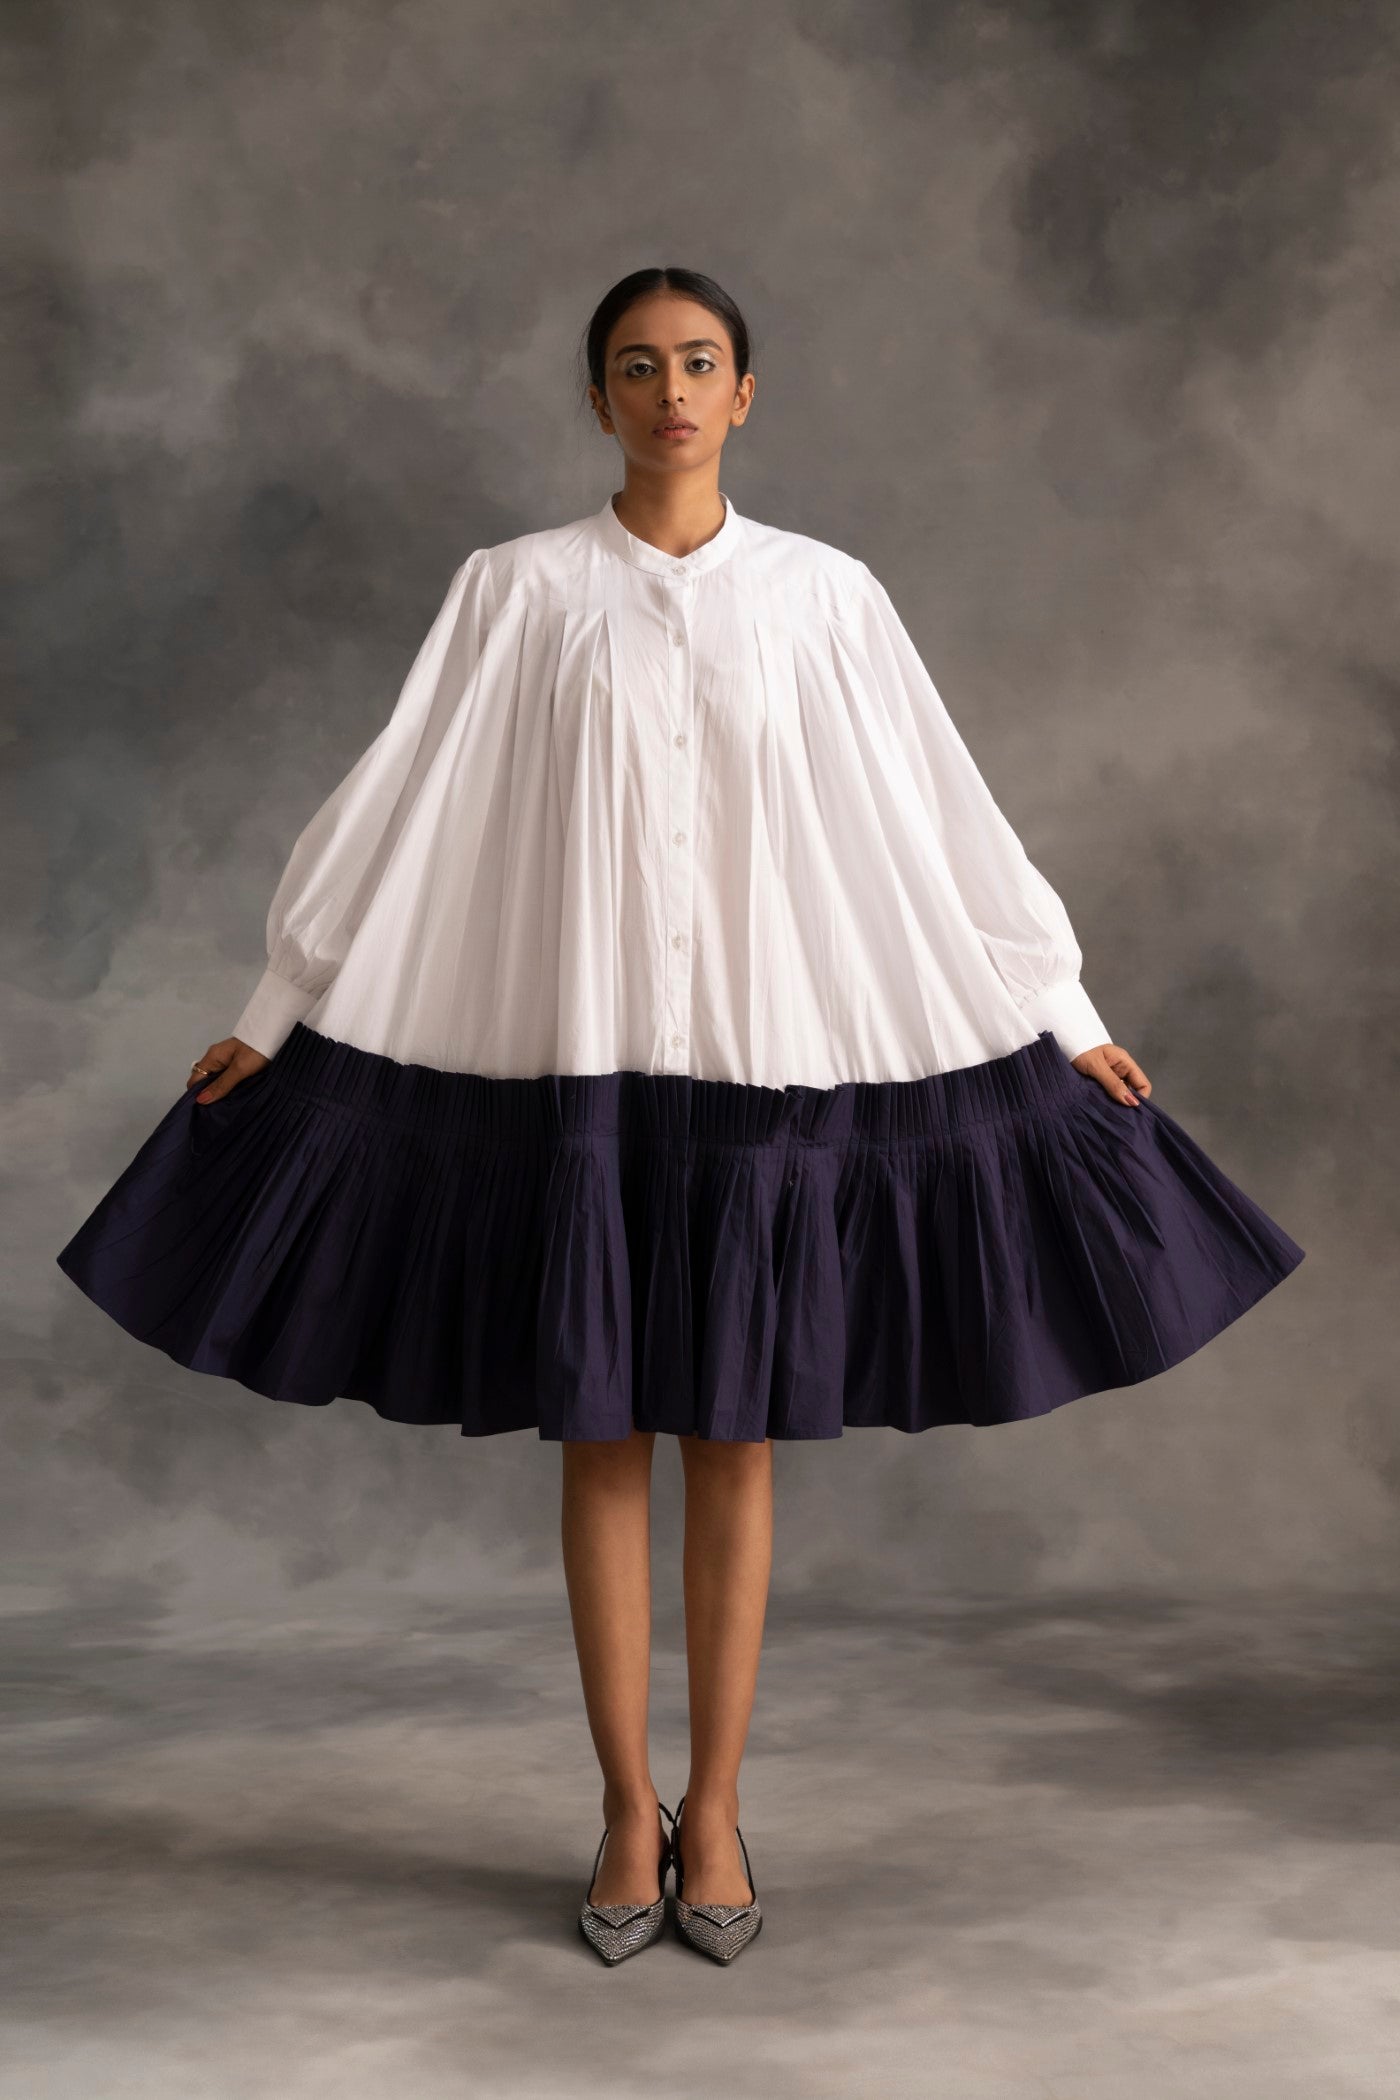 White & purple pleated dress